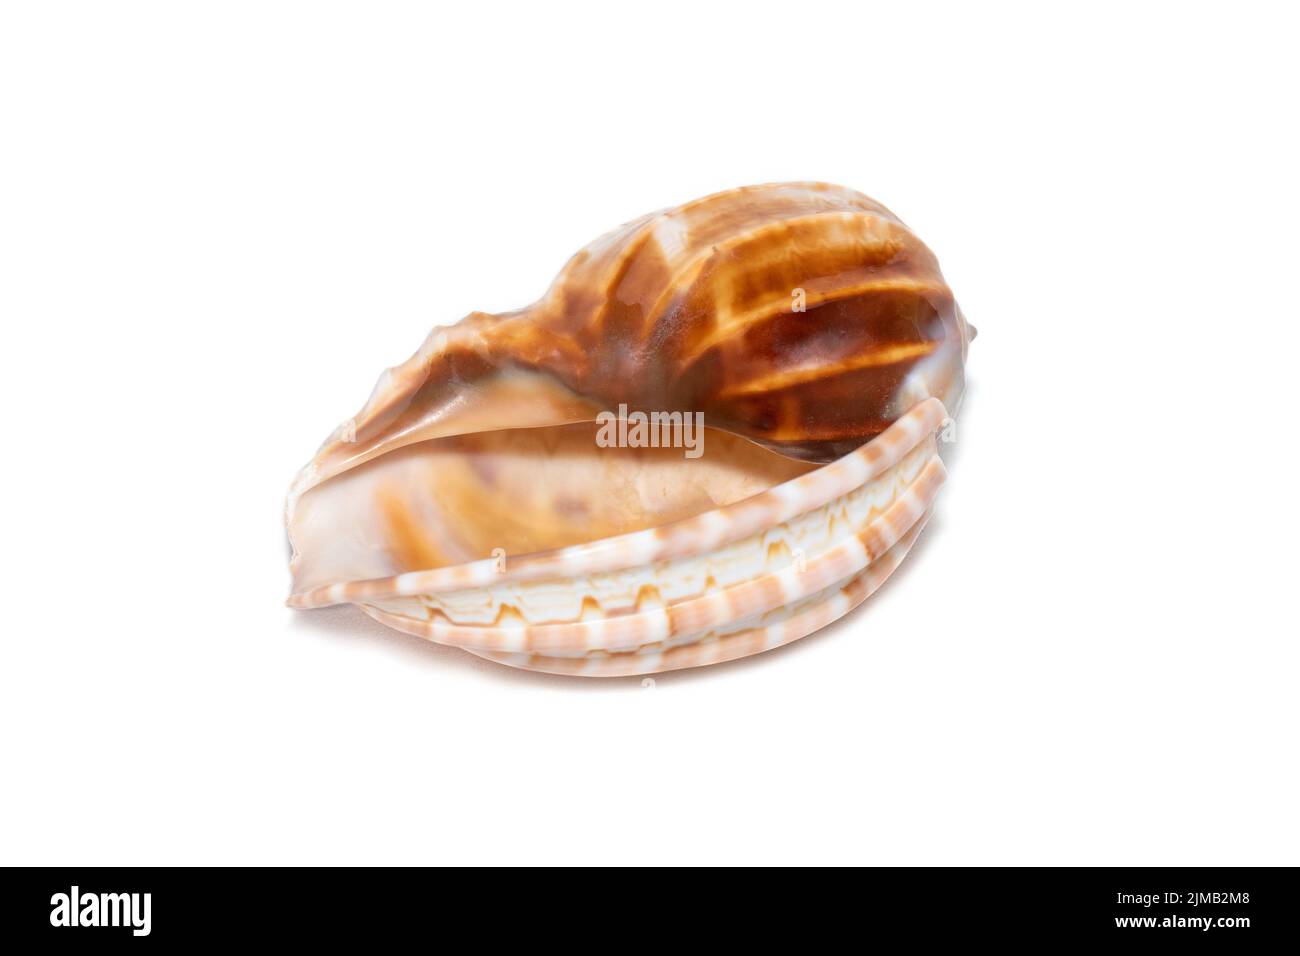 Image of harpaconoidalis conch seashell on a white background. Sea shells. Undersea Animals. Stock Photo